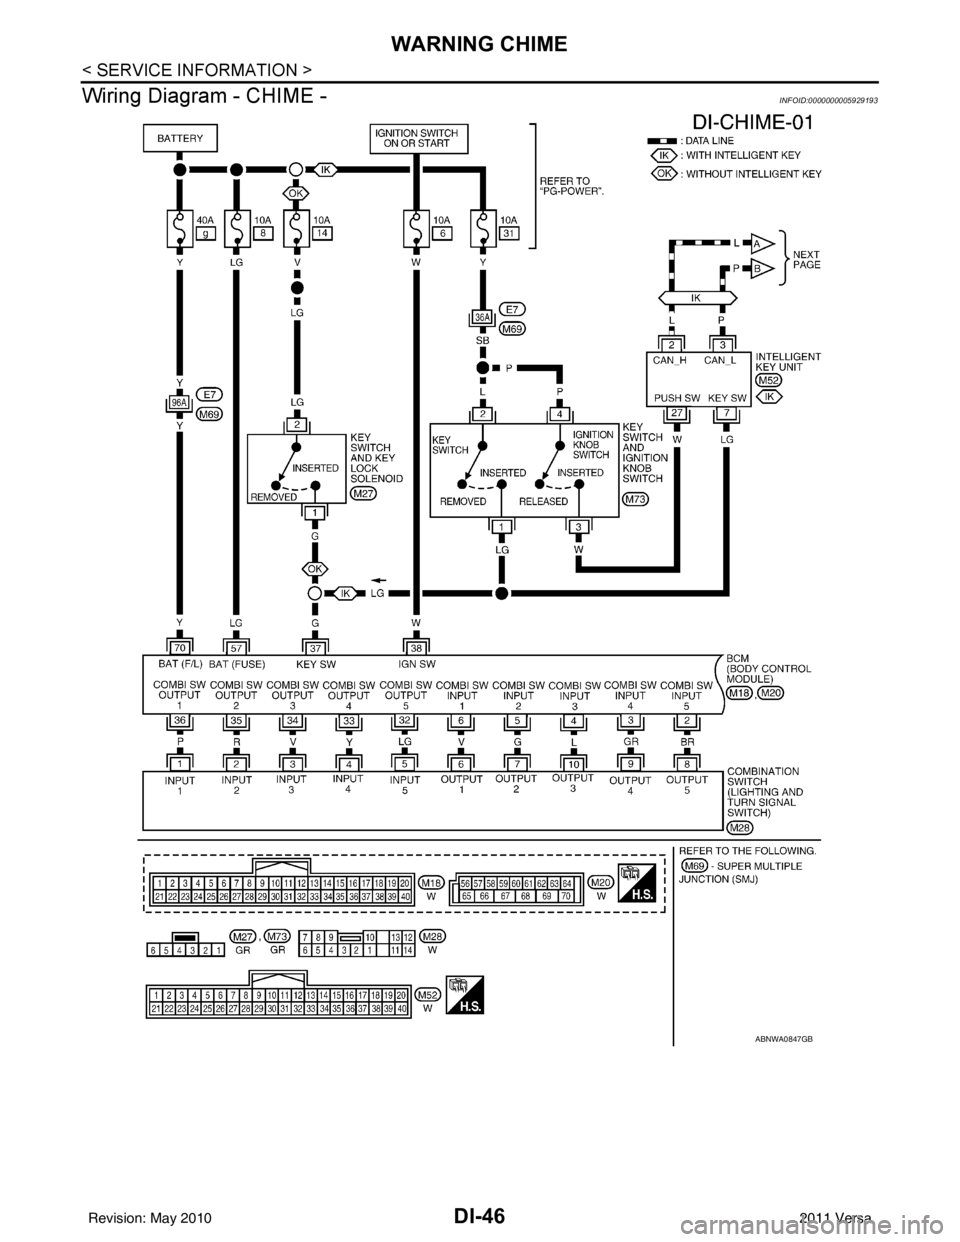 NISSAN LATIO 2011  Service Repair Manual DI-46
< SERVICE INFORMATION >
WARNING CHIME
Wiring Diagram - CHIME -
INFOID:0000000005929193
ABNWA0847GB
Revision: May 2010 2011 Versa 